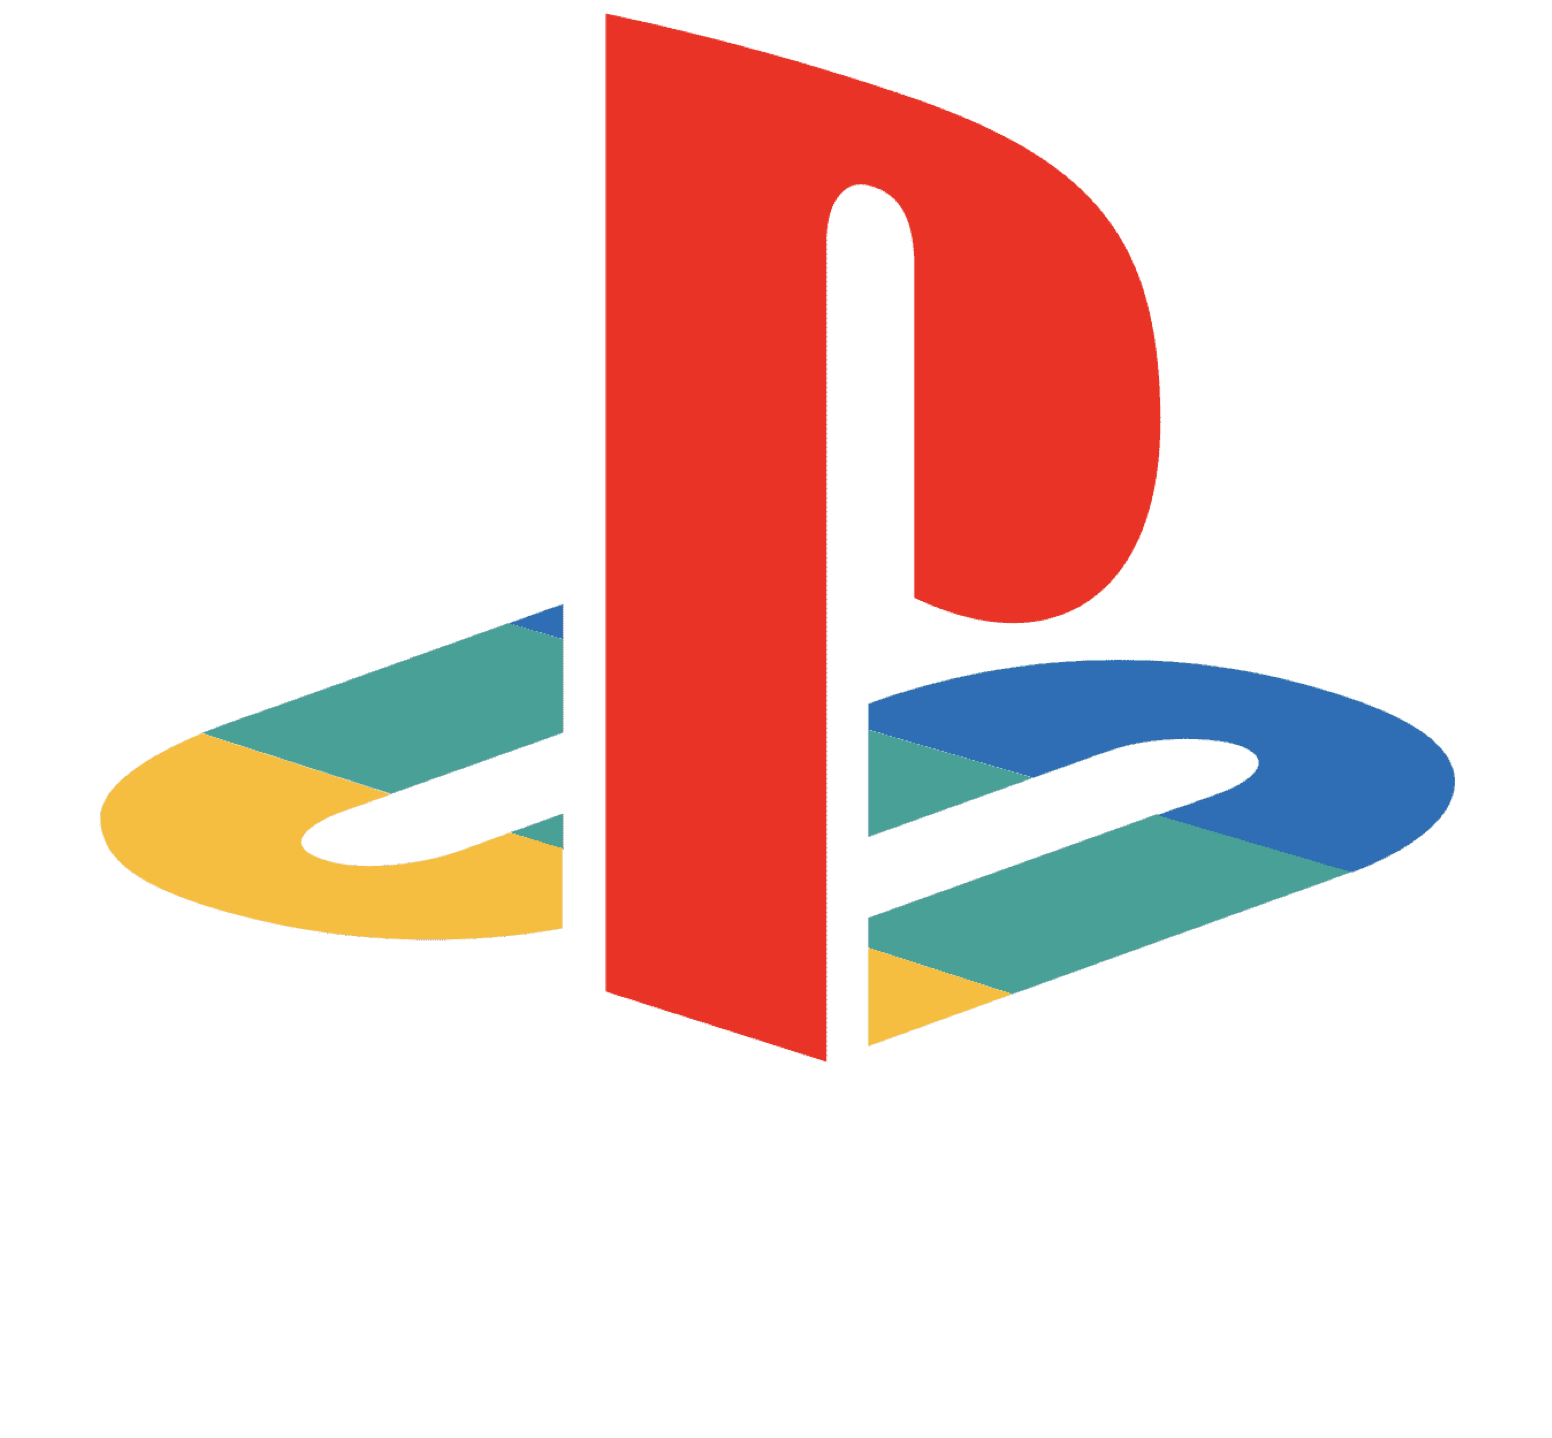 PlayStation logo recreation by OliCrack on DeviantArt